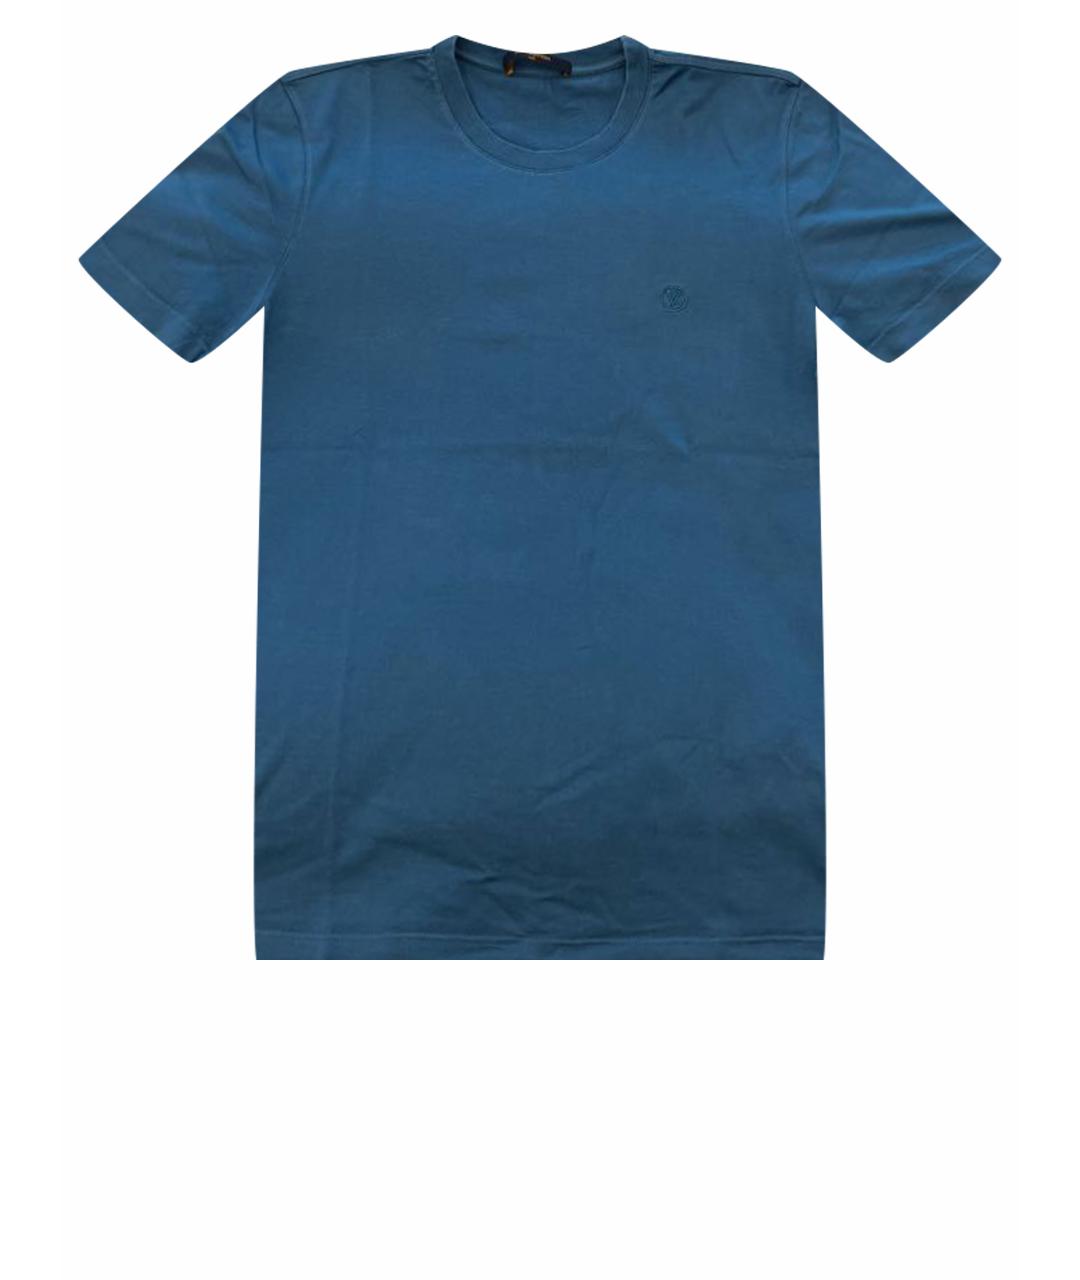 LOUIS VUITTON PRE-OWNED Синяя хлопковая футболка, фото 1